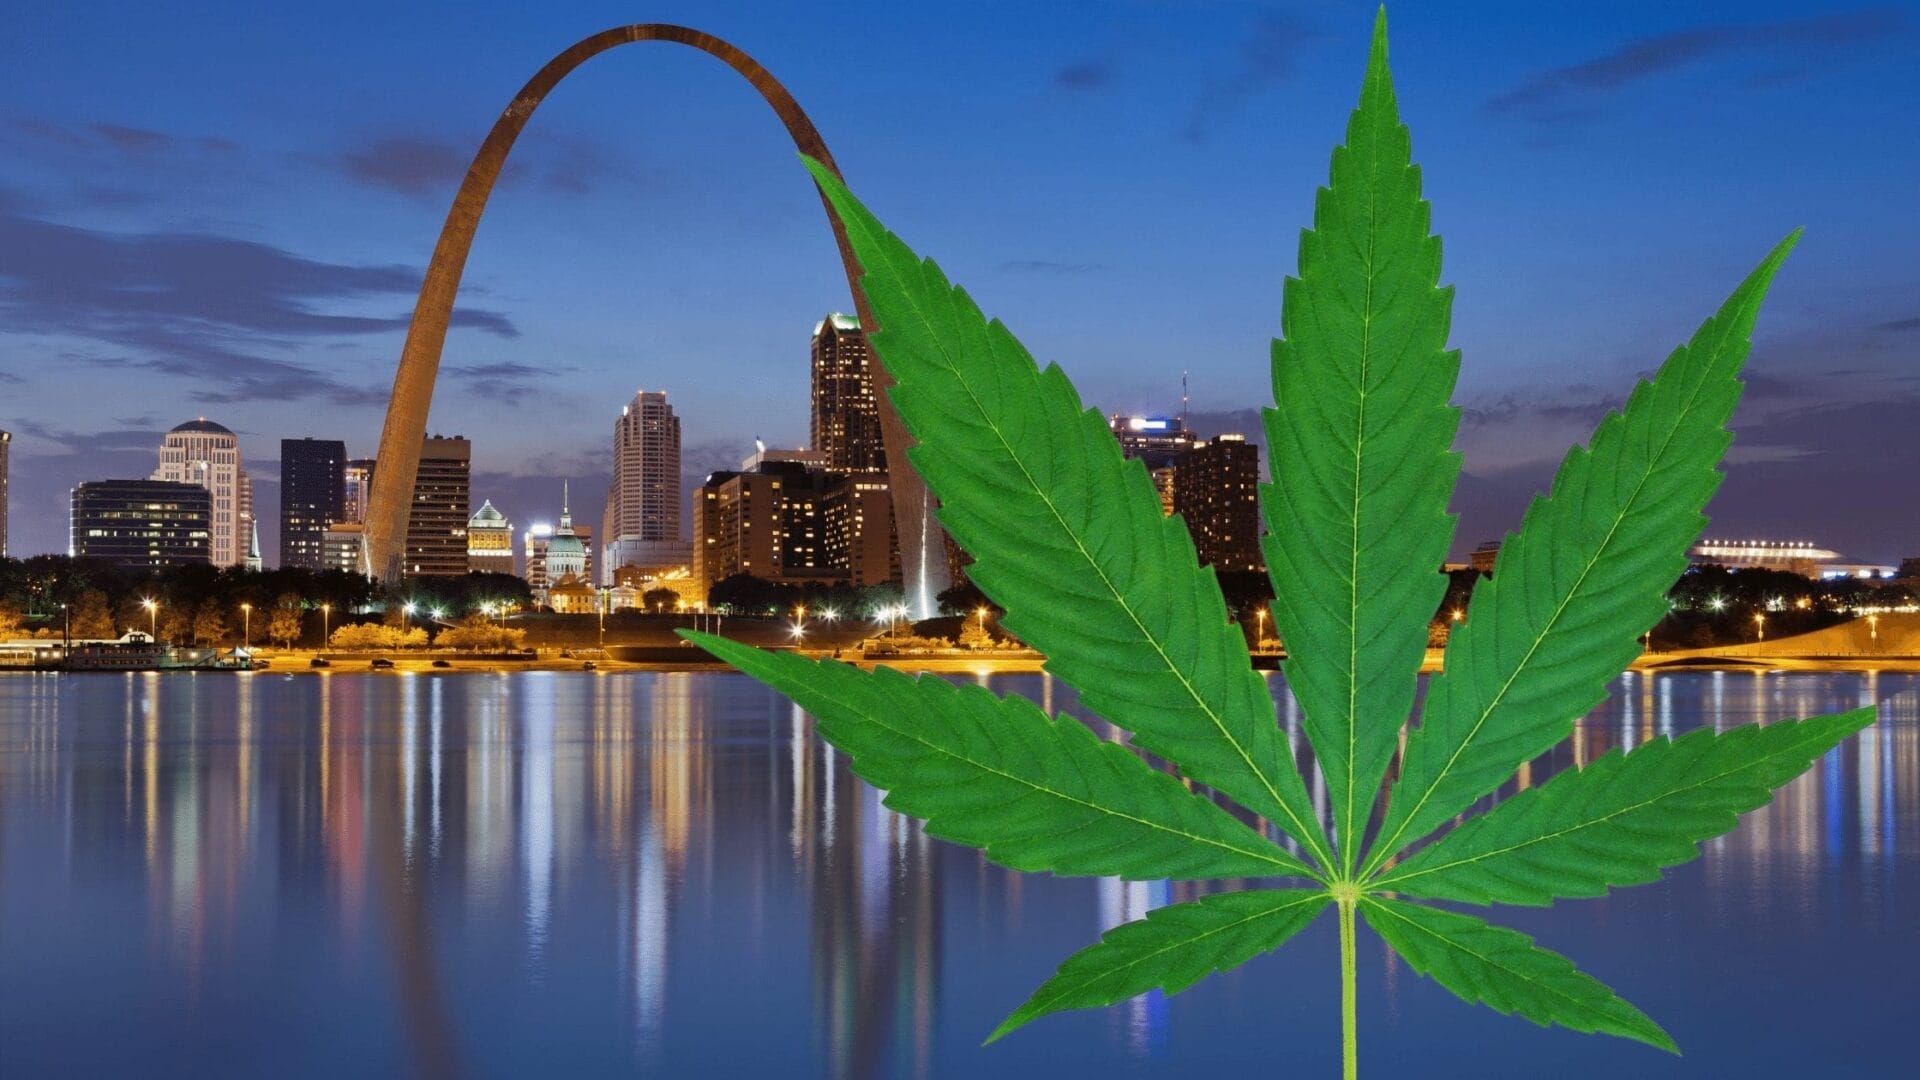 Missouri Medical Marijuana History